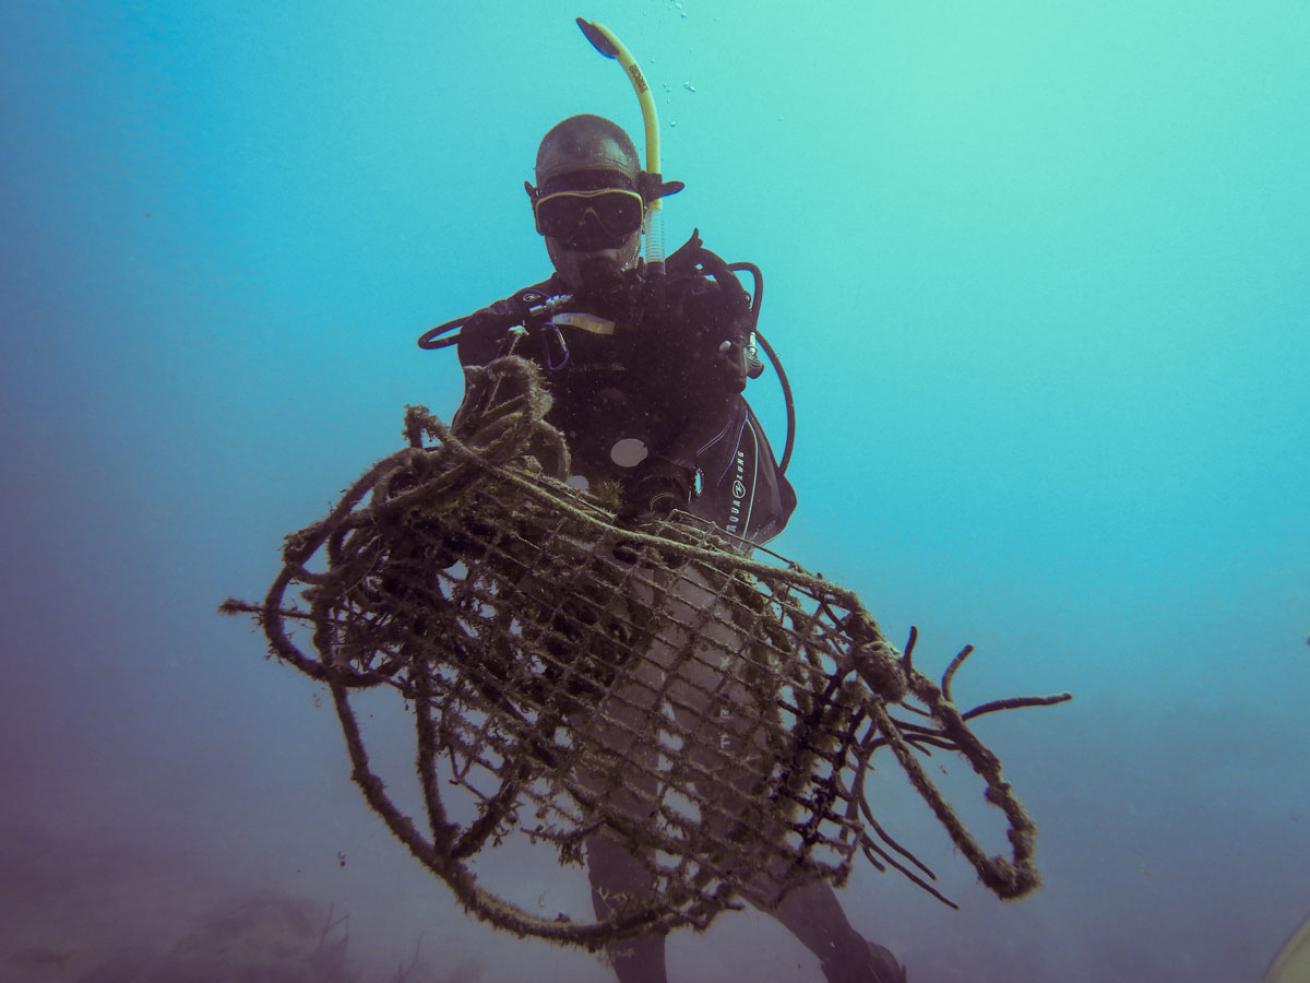 Scuba Diver Doug Hoffman Collects Trash Underwater